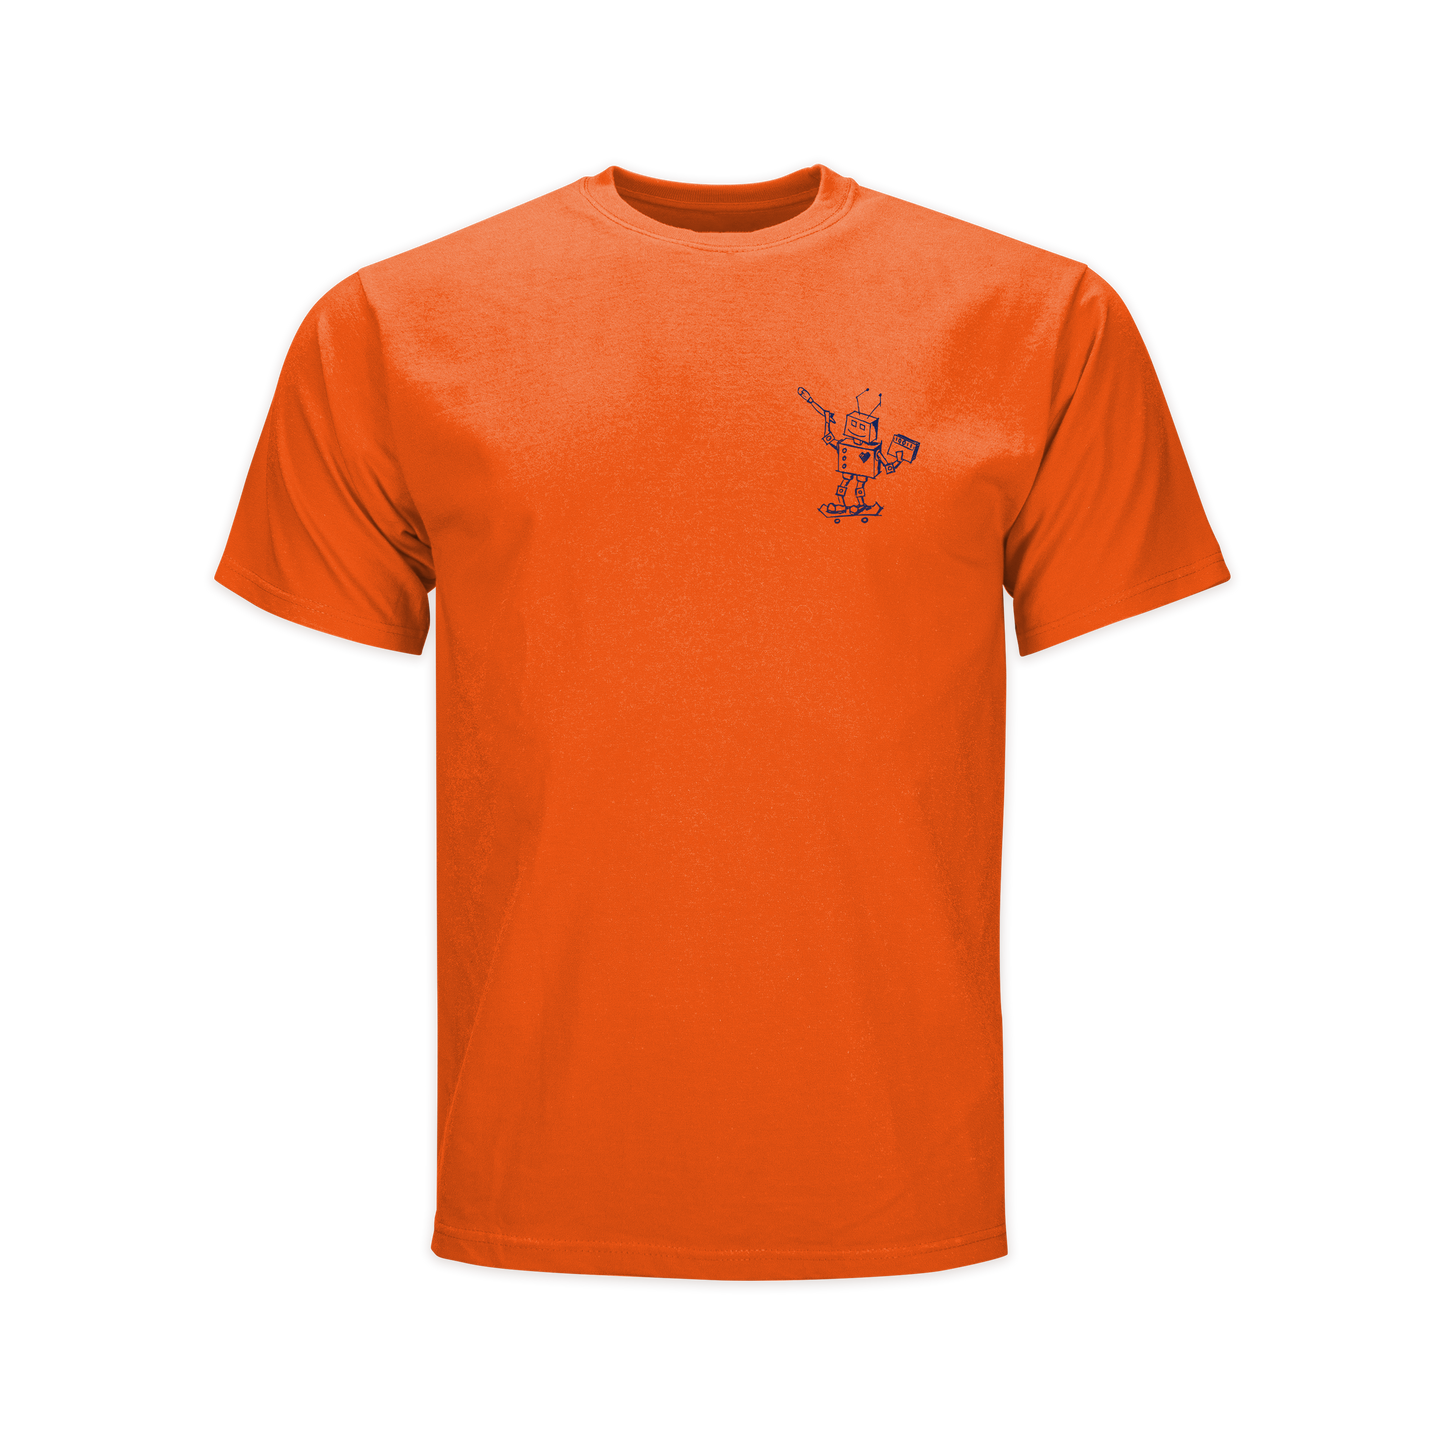 Leibniz IGS T-Shirt "LIGSI" - Orange